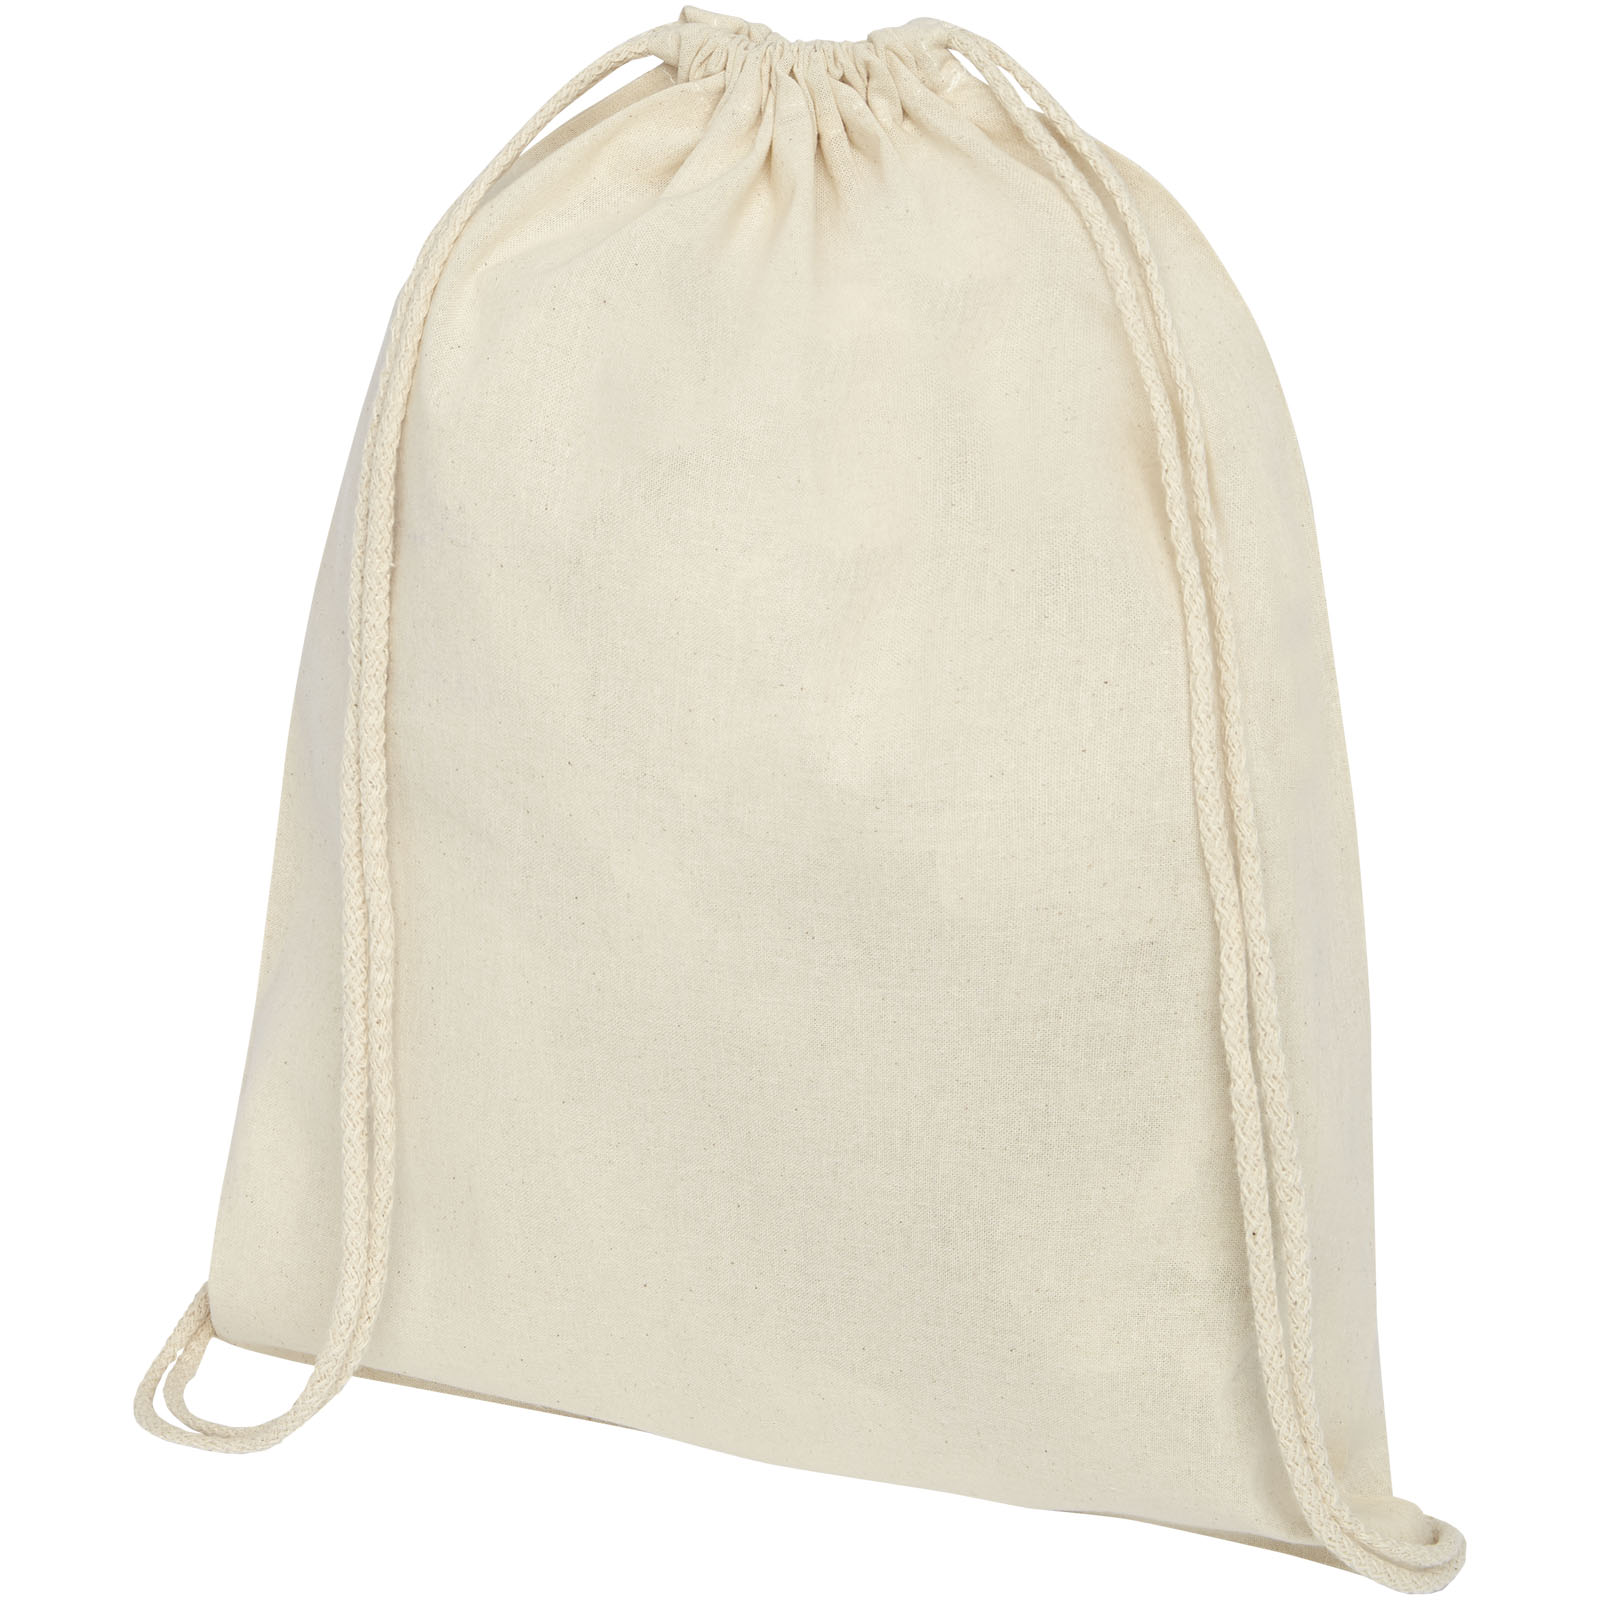 Drawstring Bags - Oregon 100 g/m² cotton drawstring backpack 5L